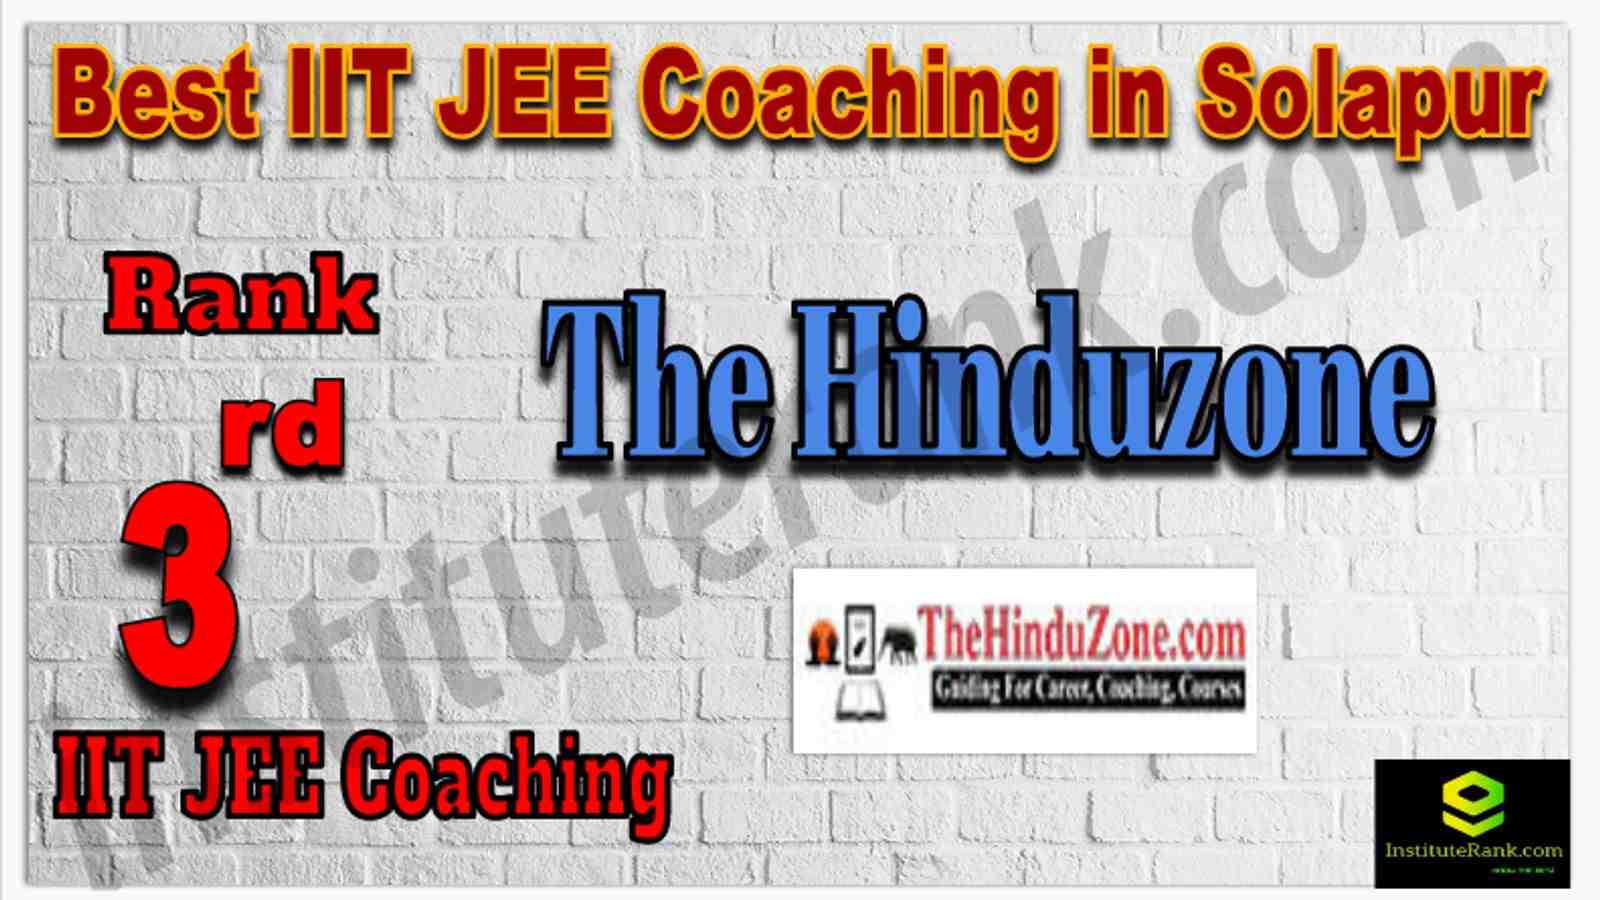 Rank 3rd Best IIT JEE Coaching in Solapur